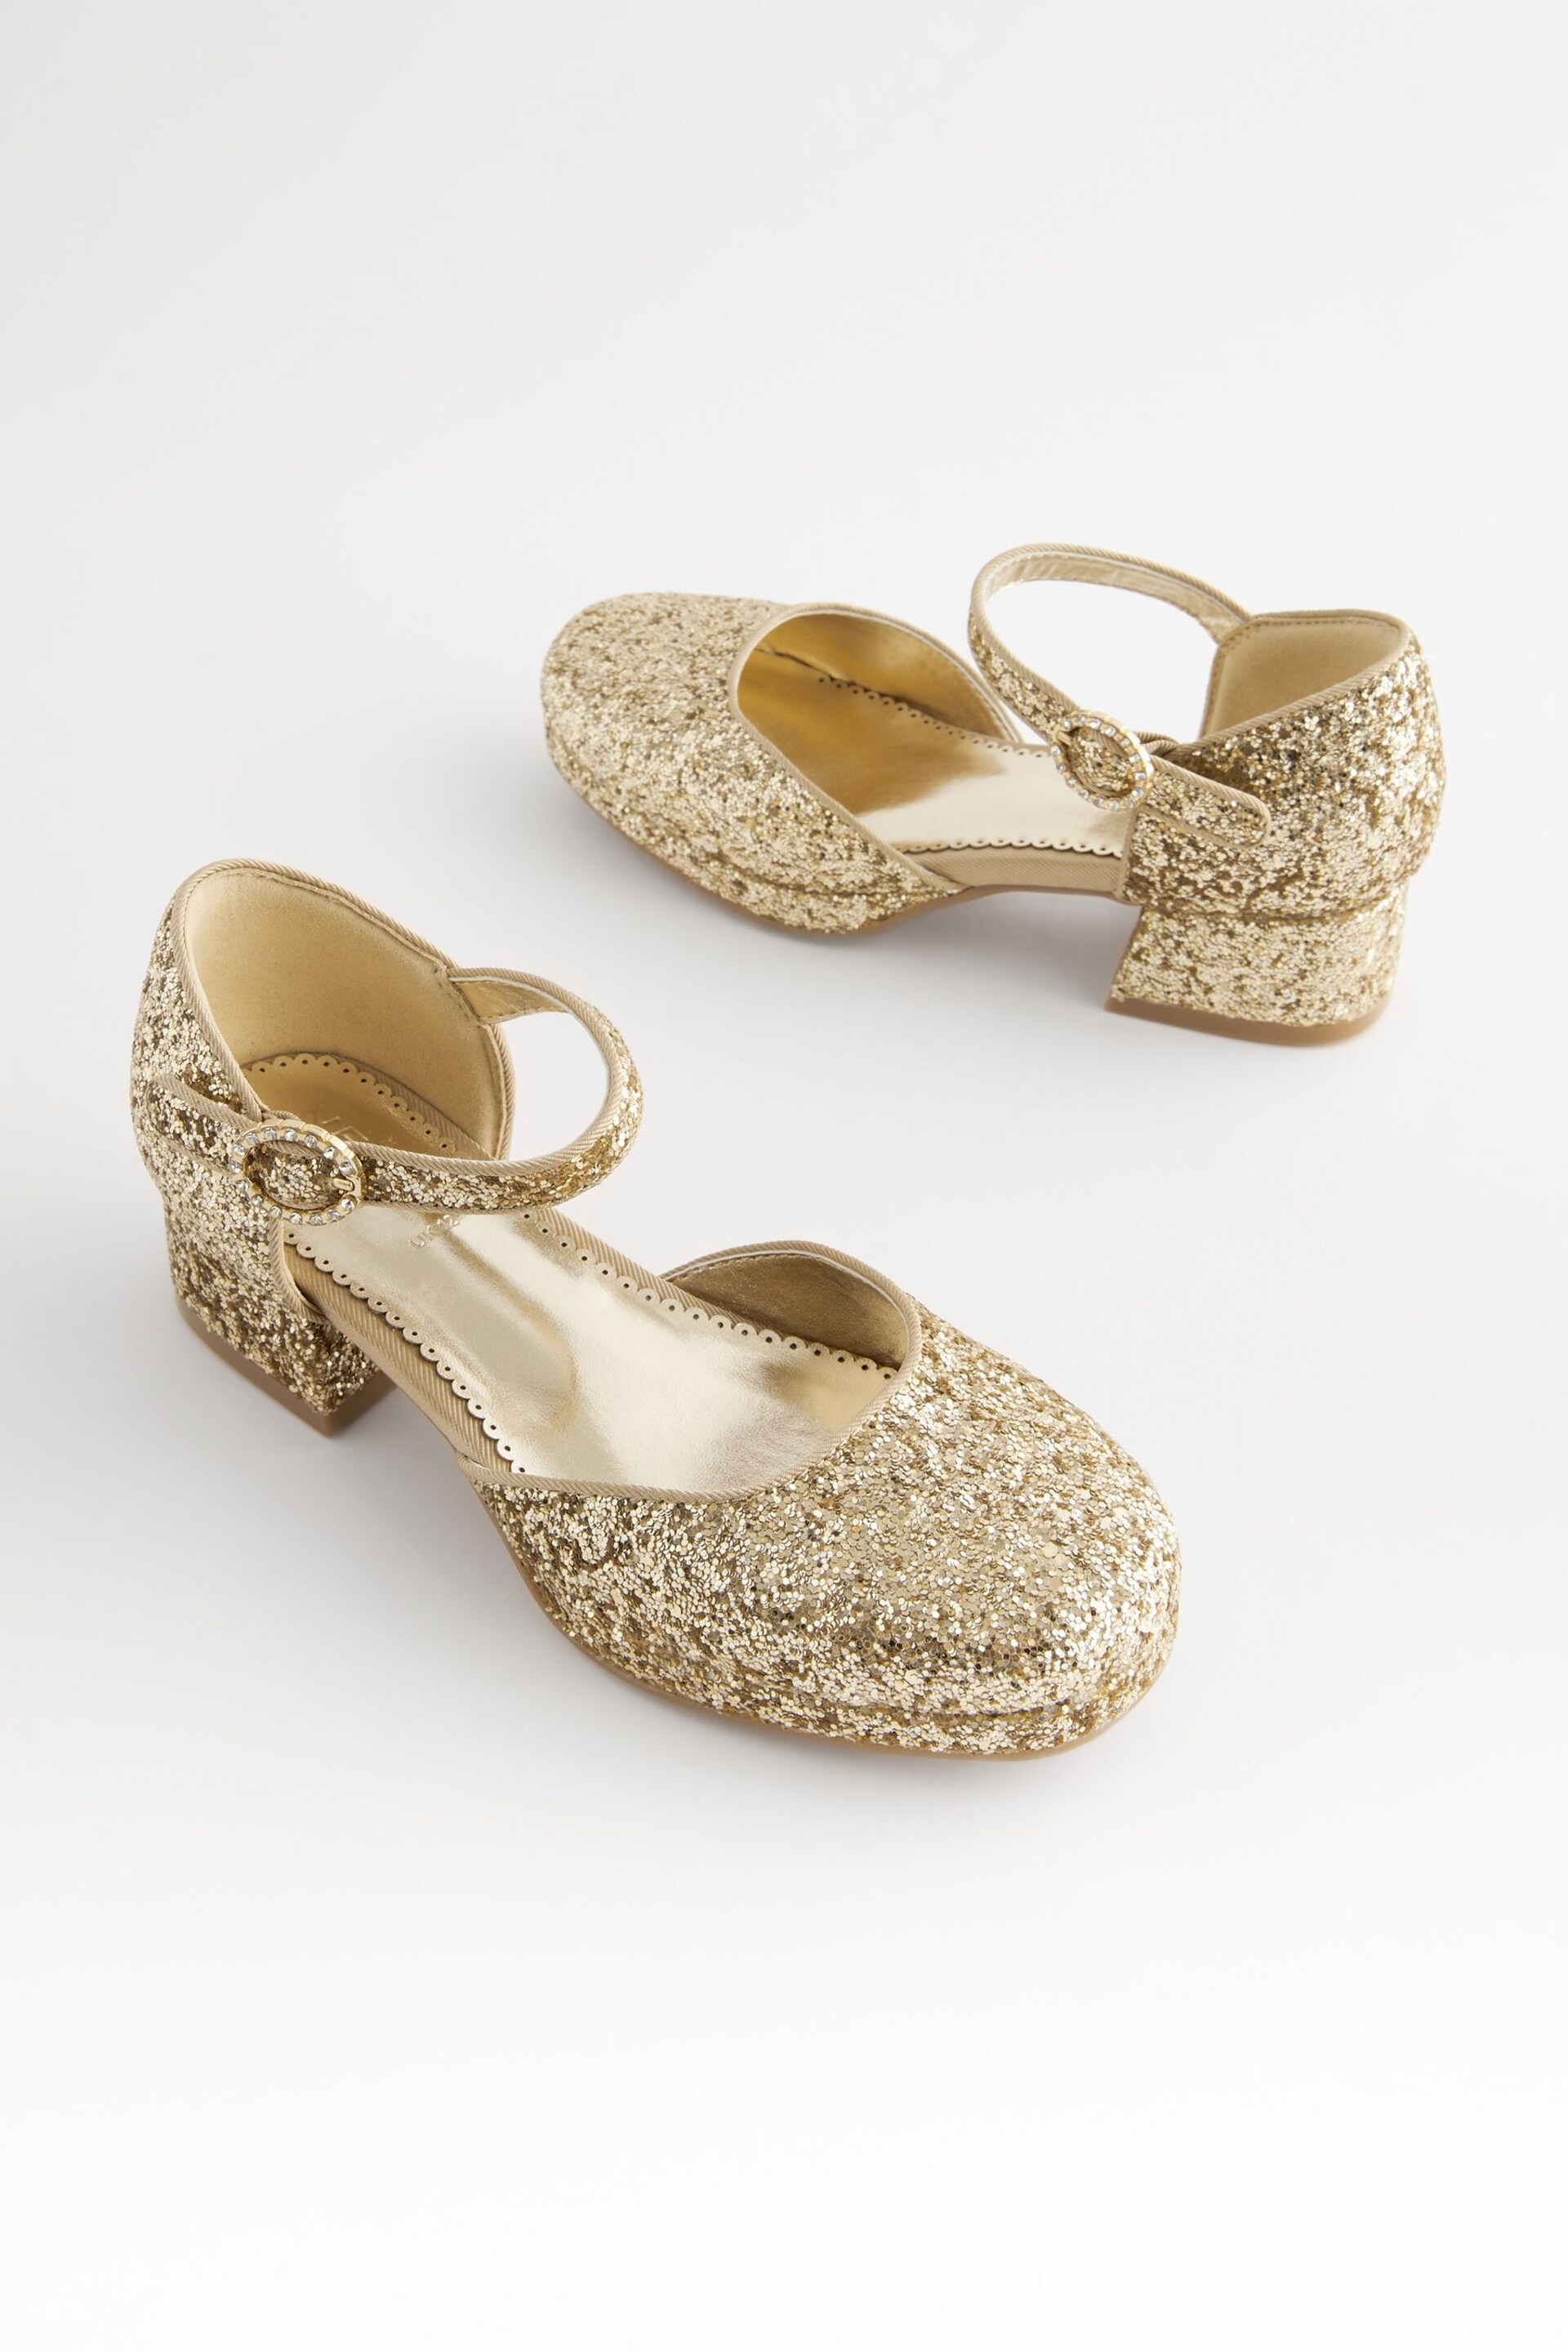 Gold Glitter Platform Heel Occasion Shoes - Image 1 of 6